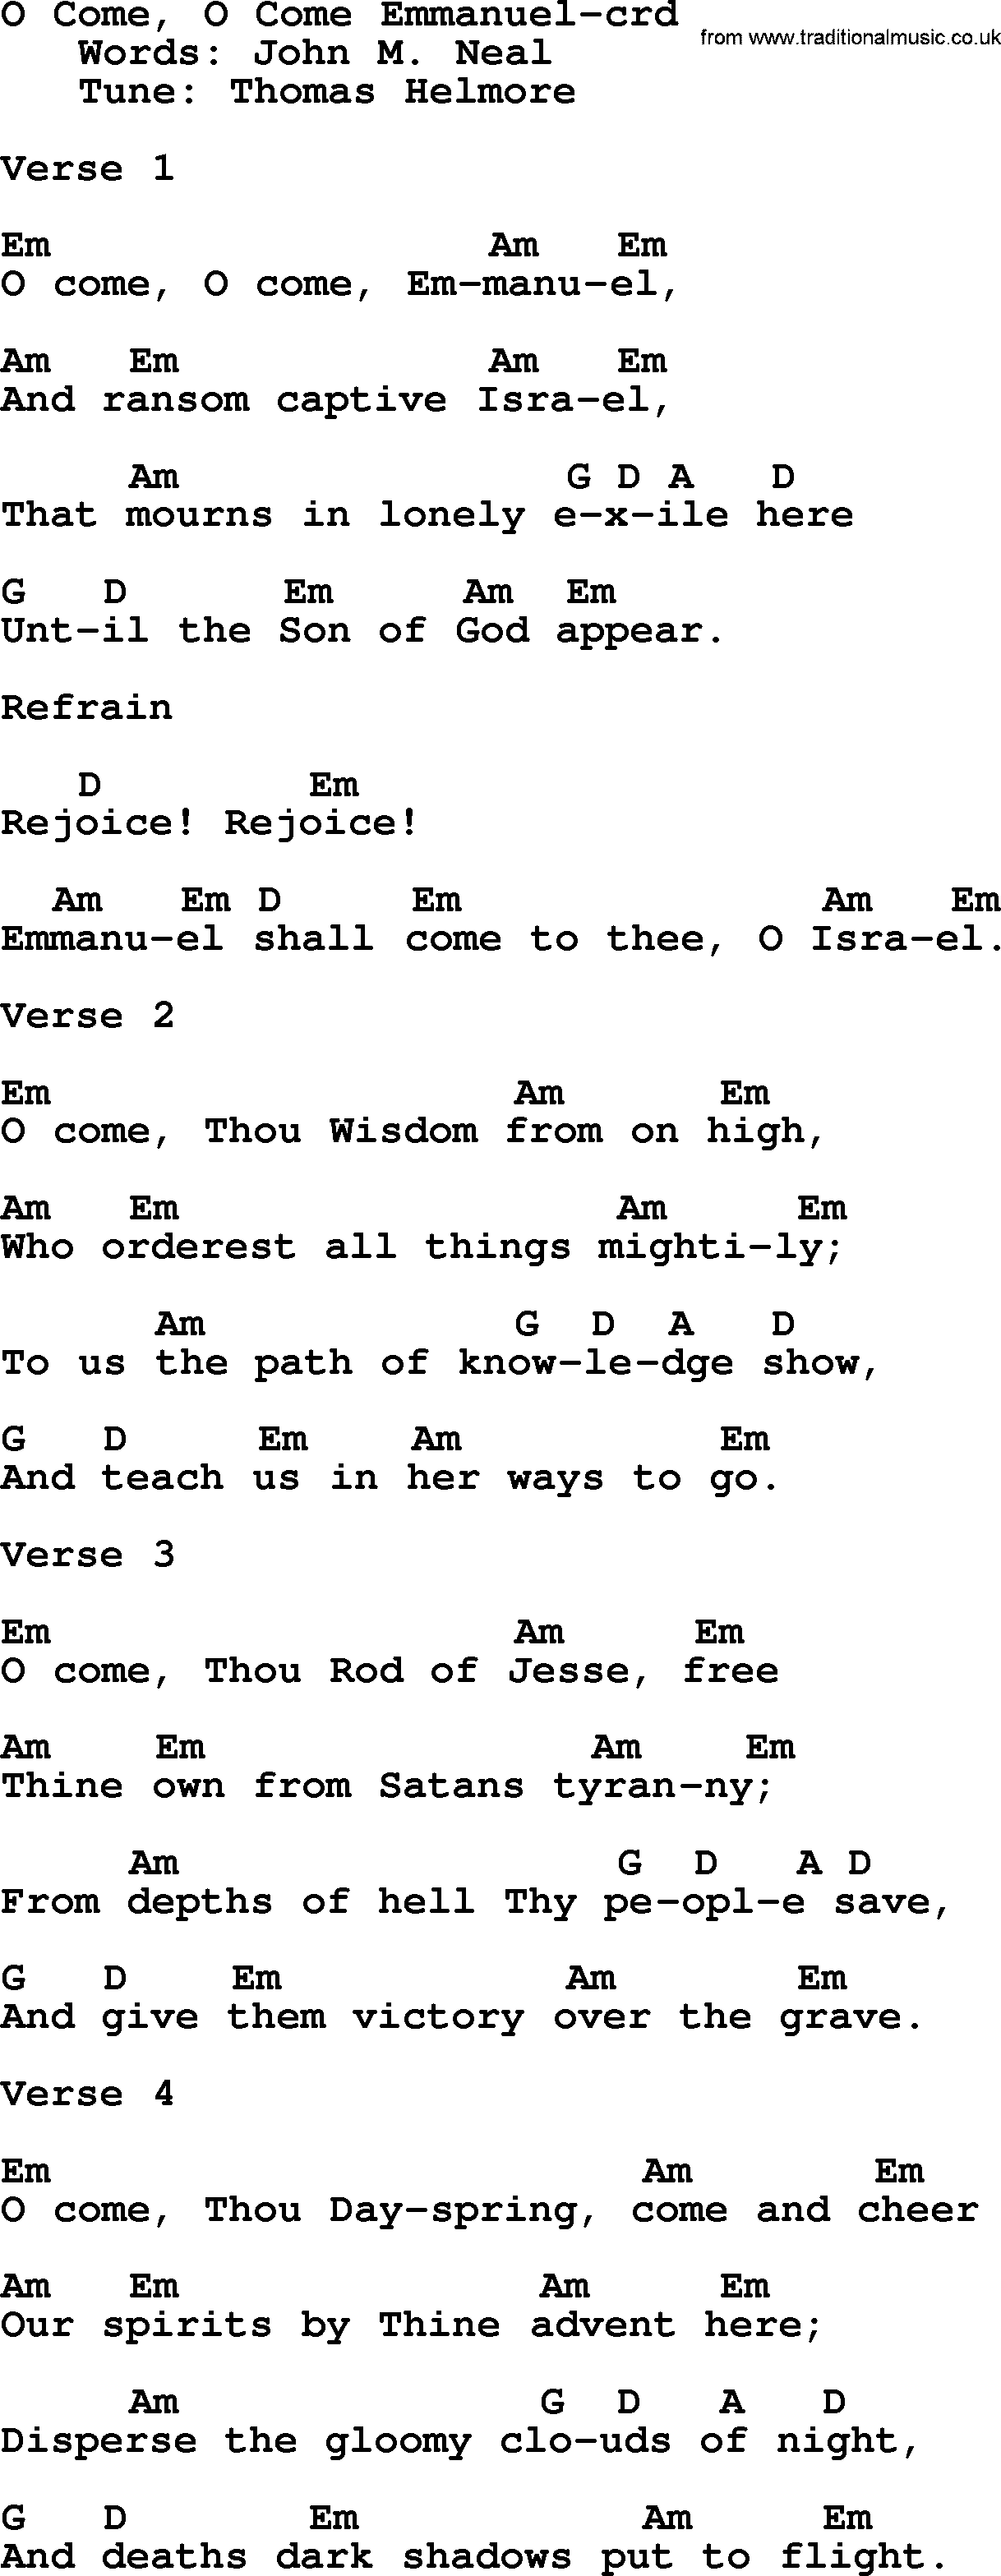 Top 500 Hymn: O Come, O Come Emmanuel, lyrics and chords